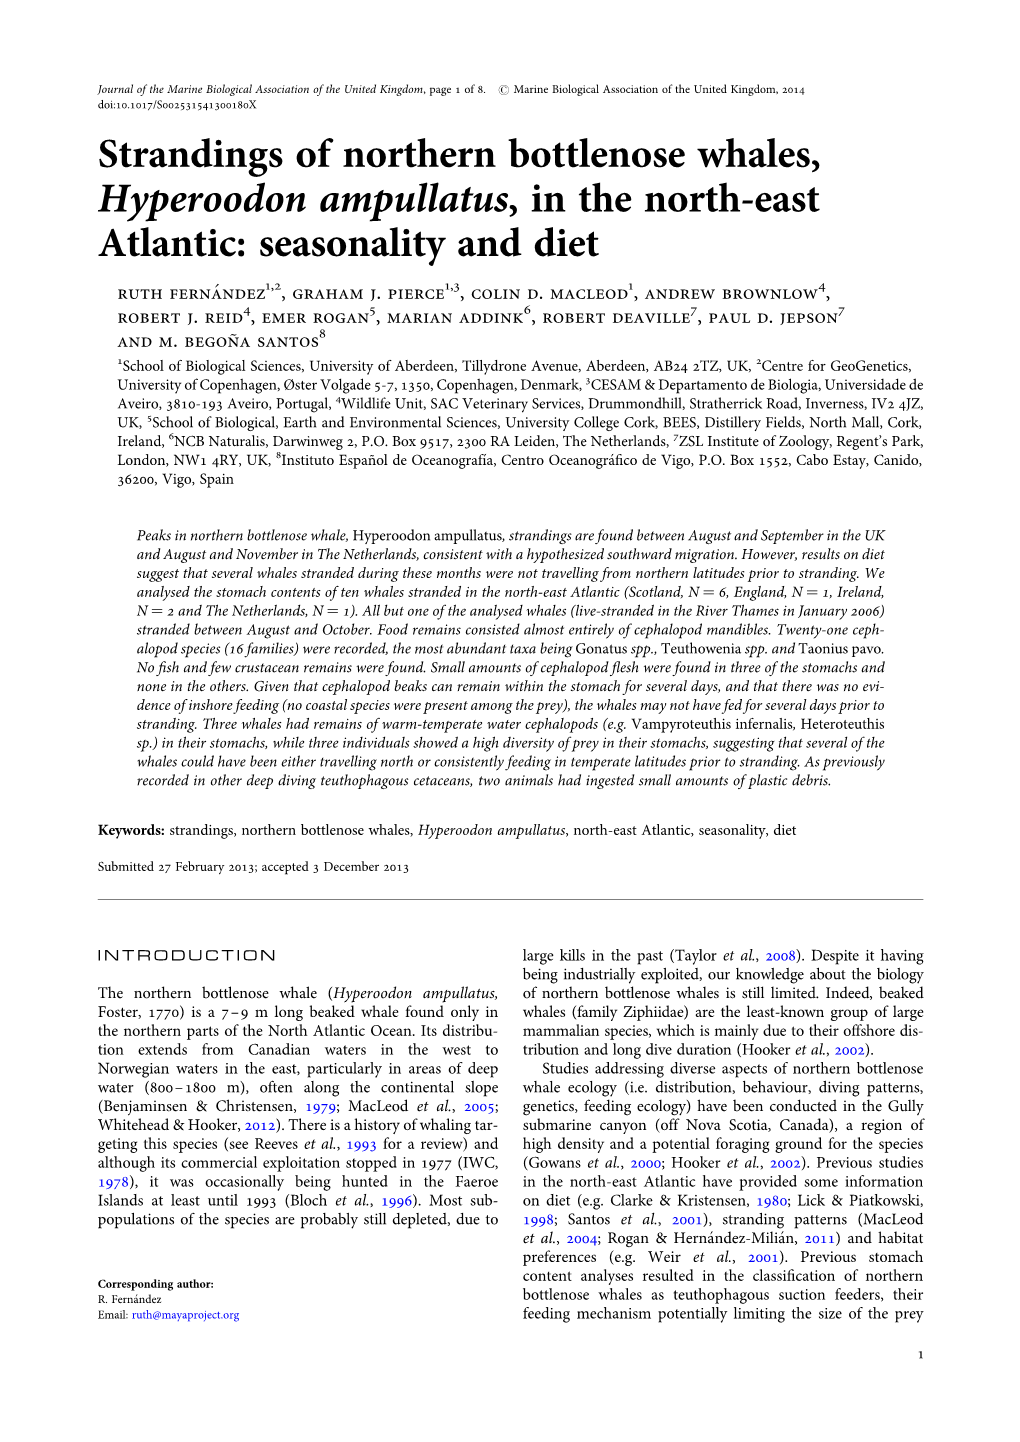 Strandings of Northern Bottlenose Whales, Hyperoodon Ampullatus, in the North-East Atlantic: Seasonality and Diet Ruth Ferna’ Ndez1,2, Graham J